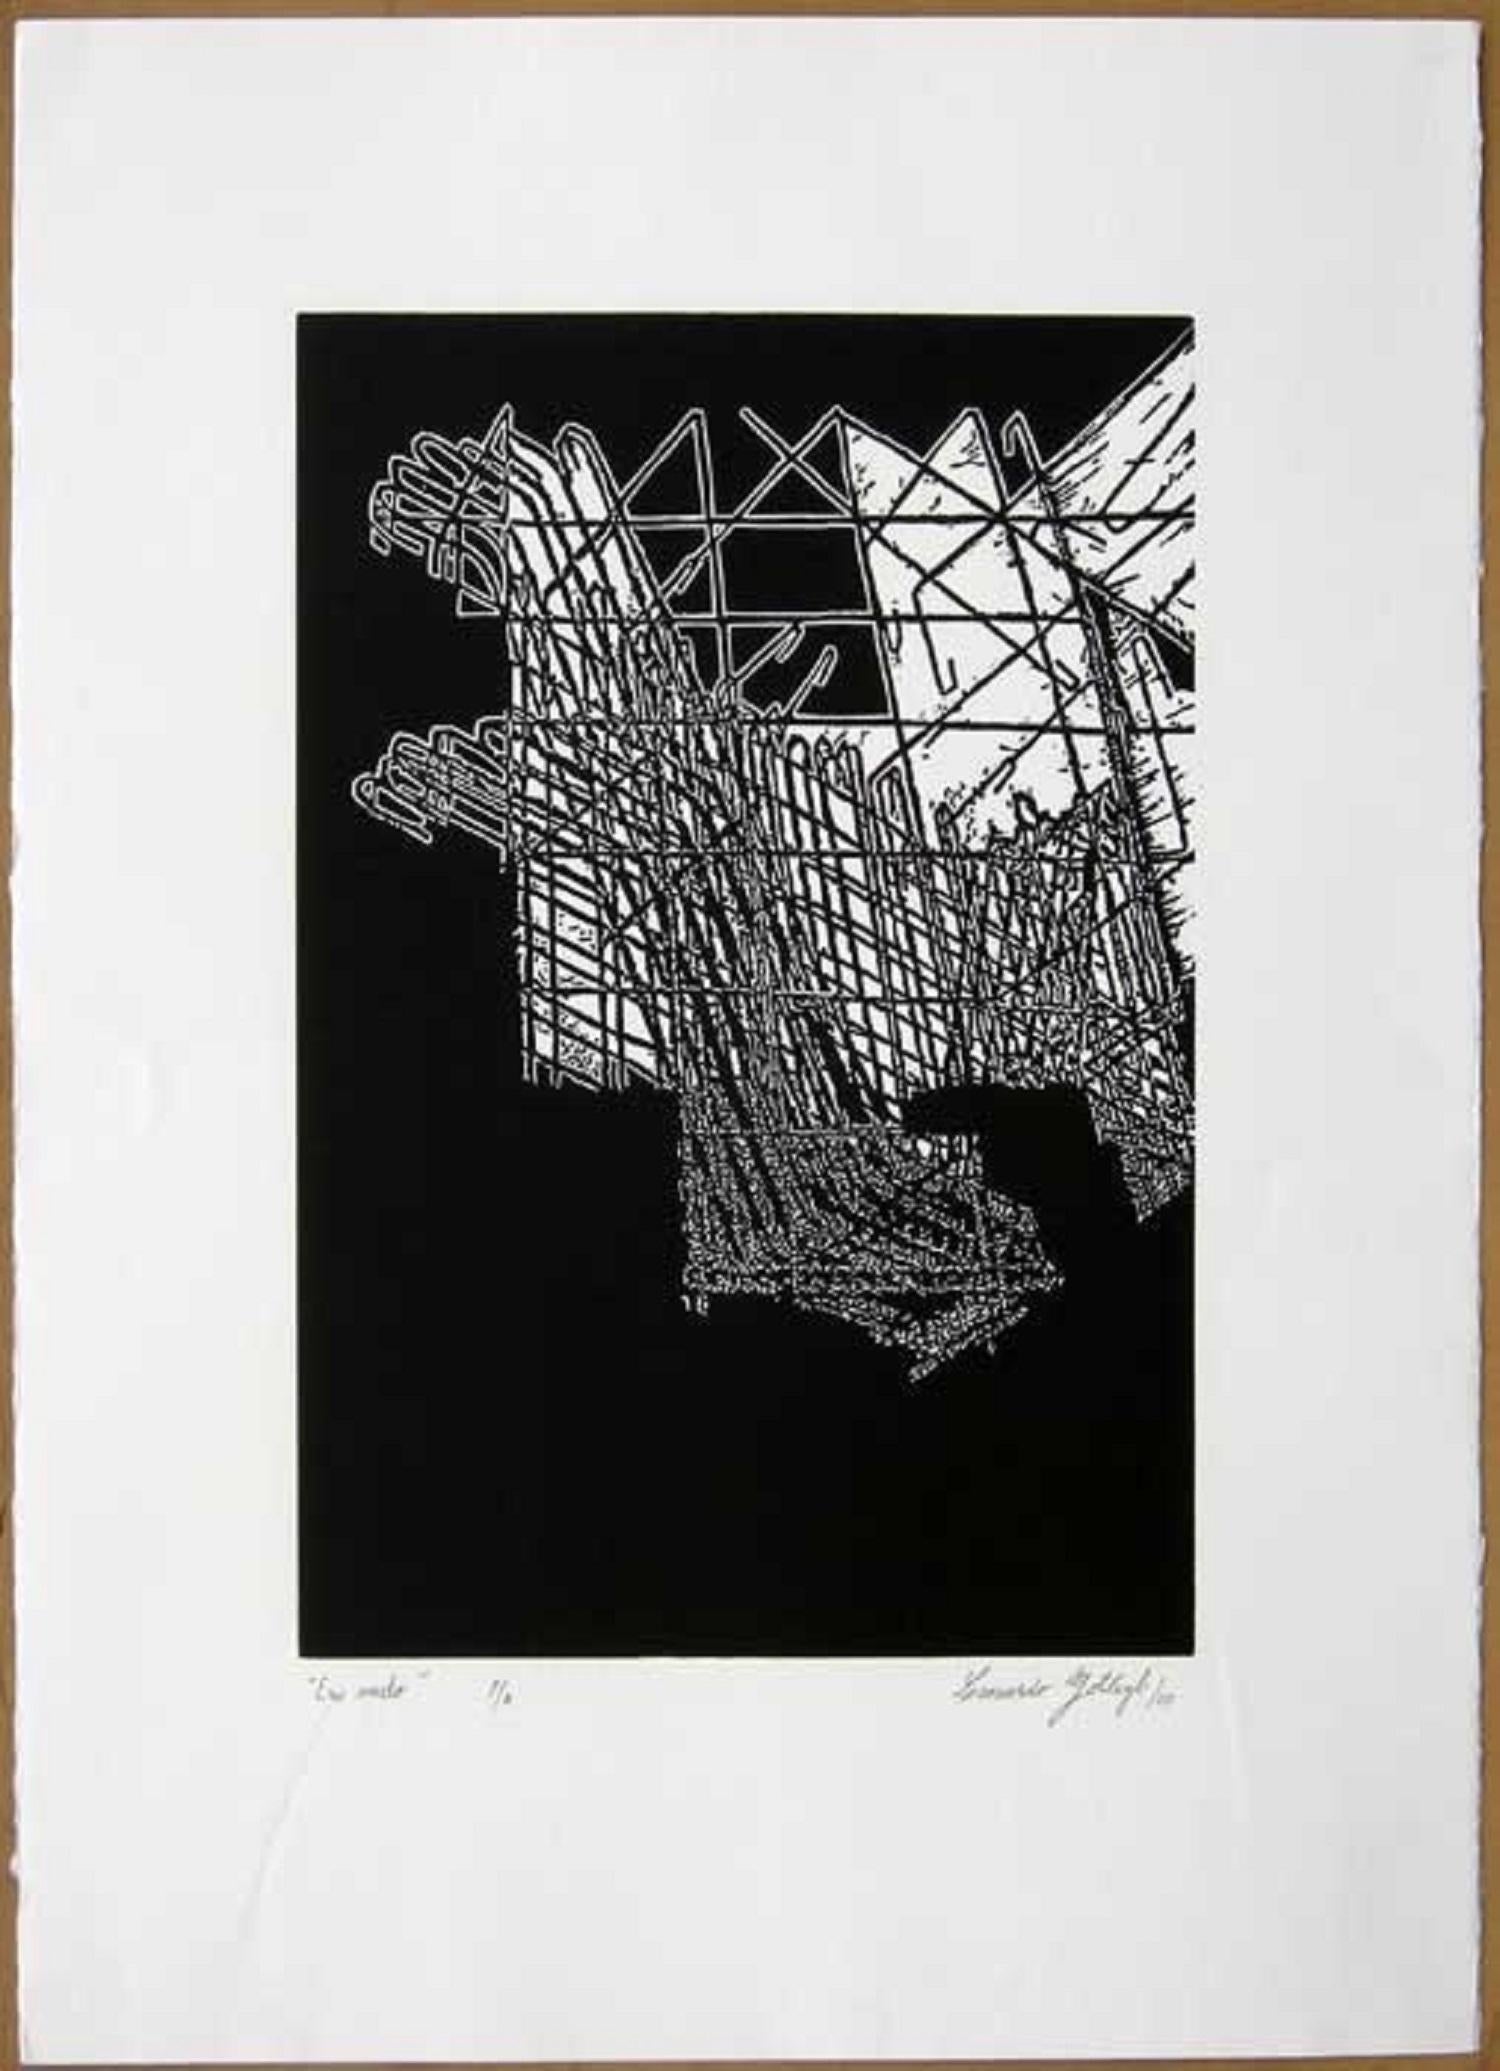 Leonardo Gotleyb, ¨En vuelo¨, 2000, Woodcut, 27.6x19.7 in